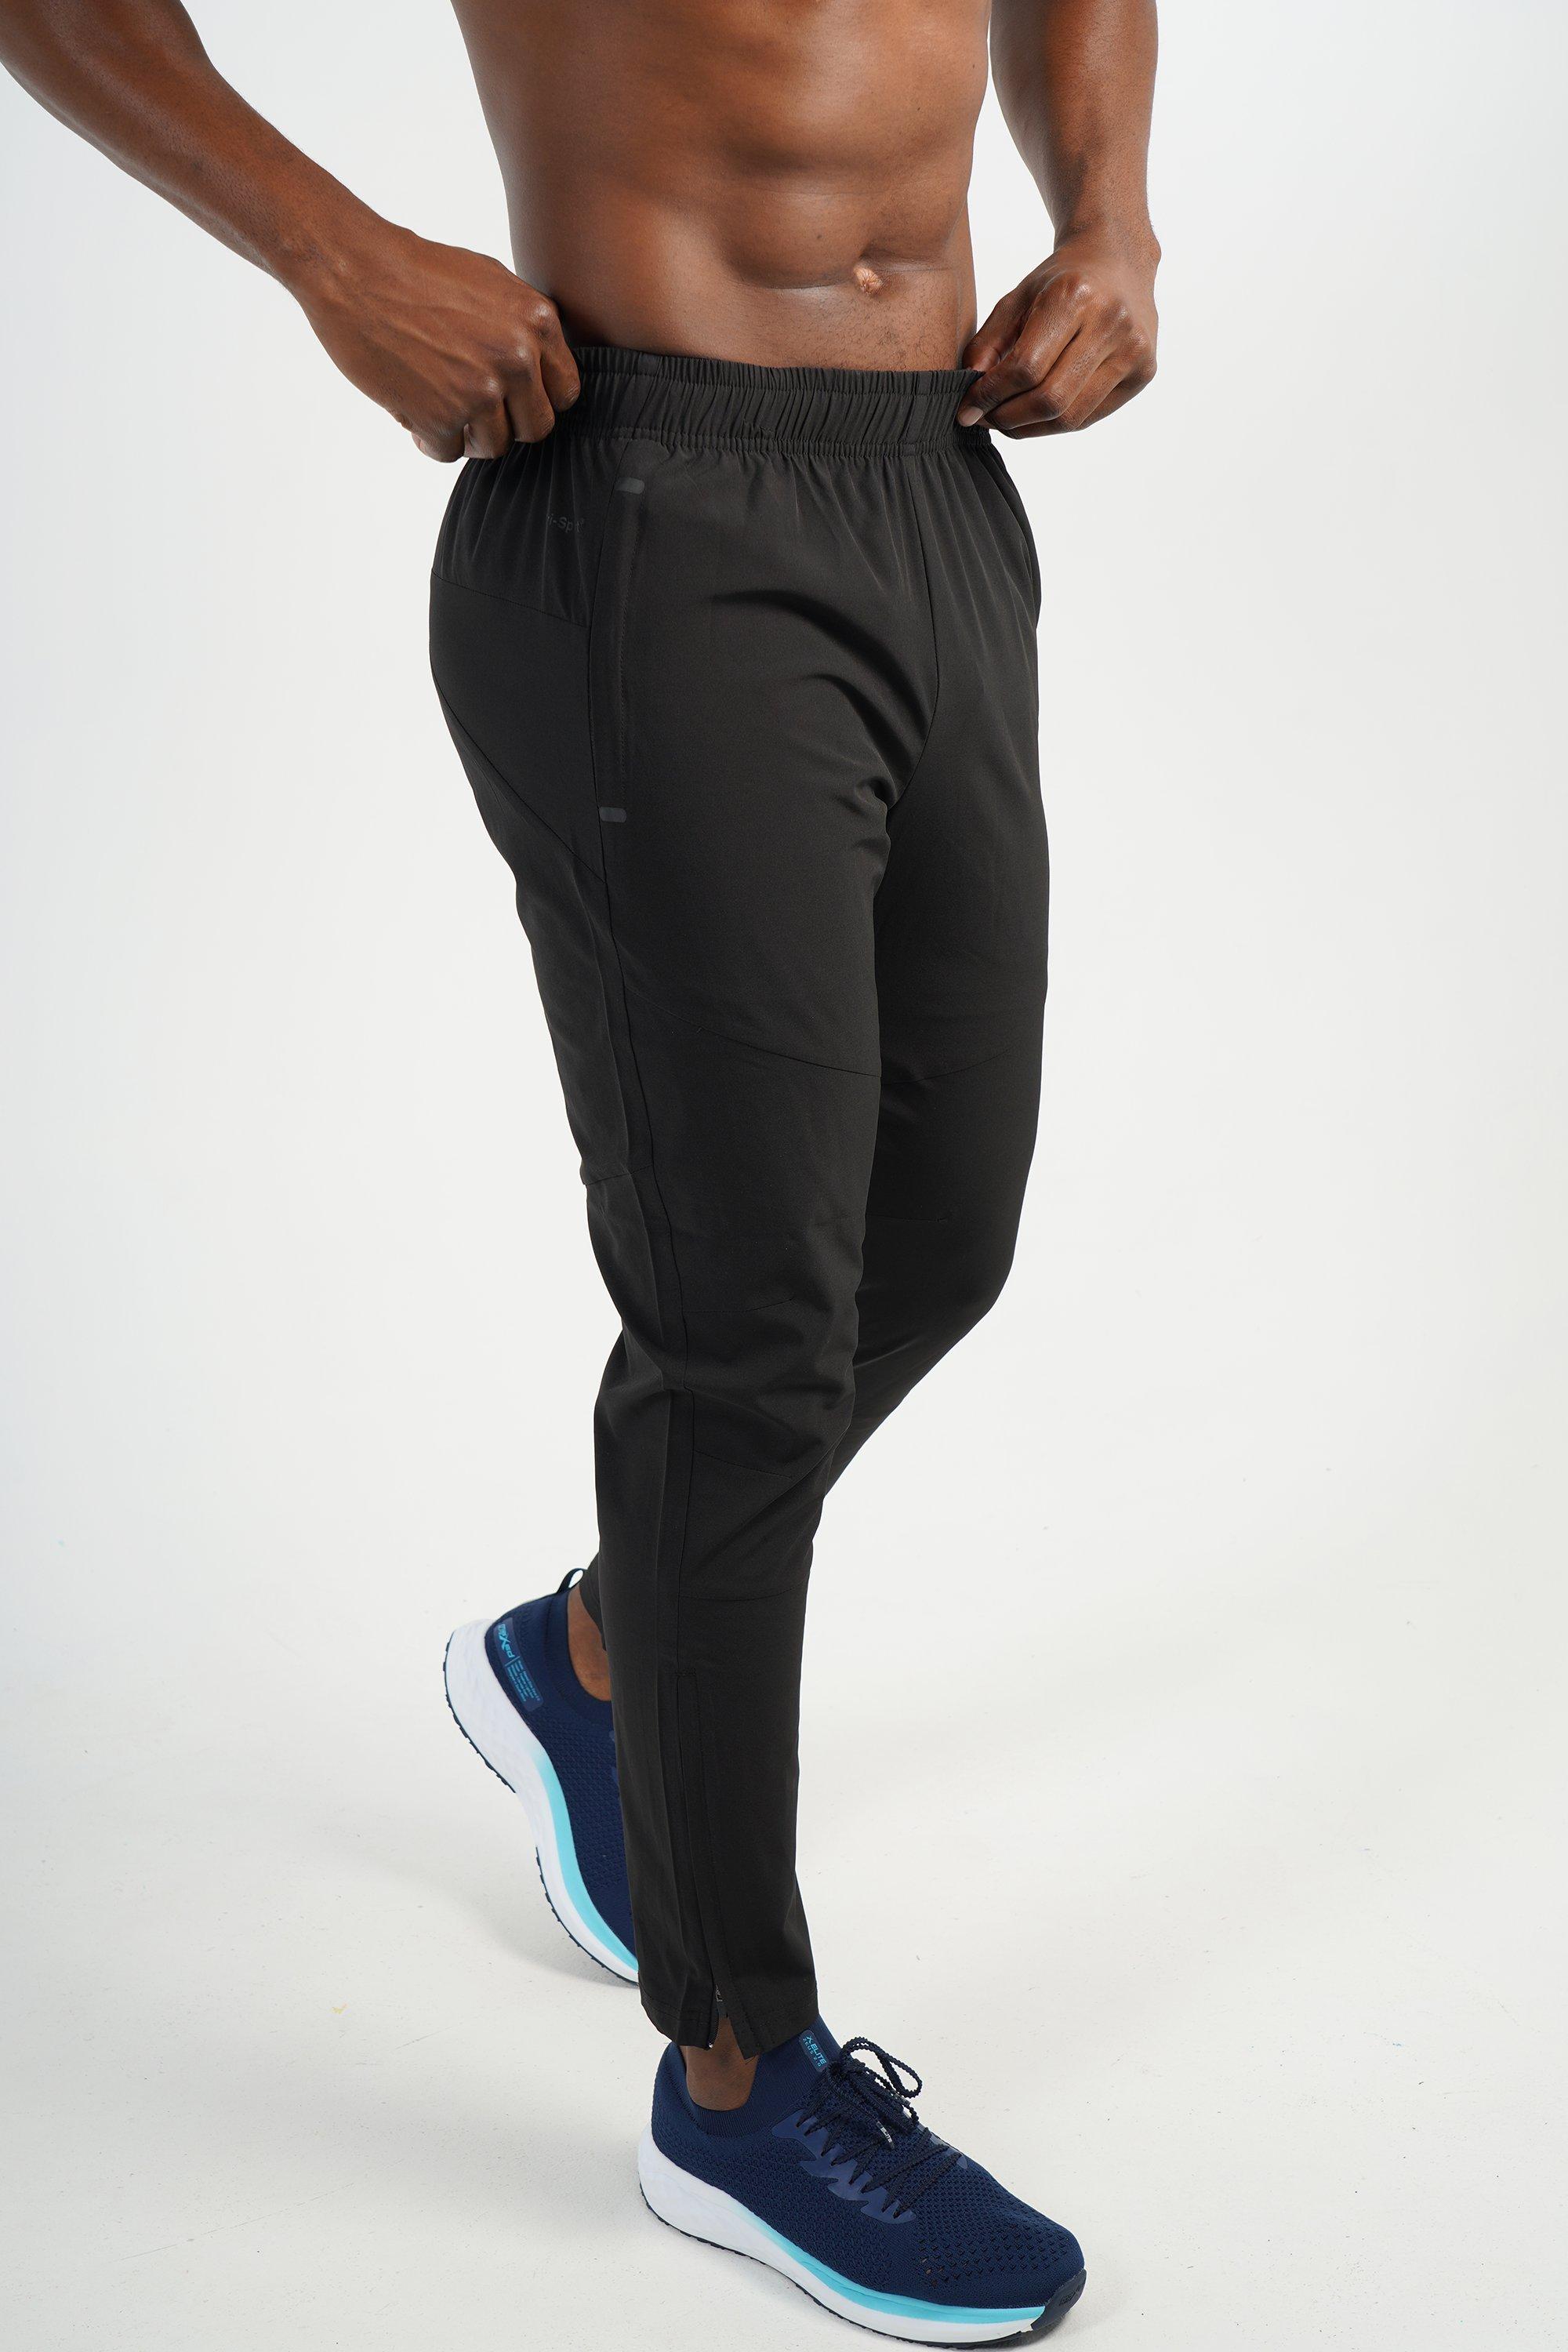 Ralph Lauren Sport black nylon workout pants men's medium